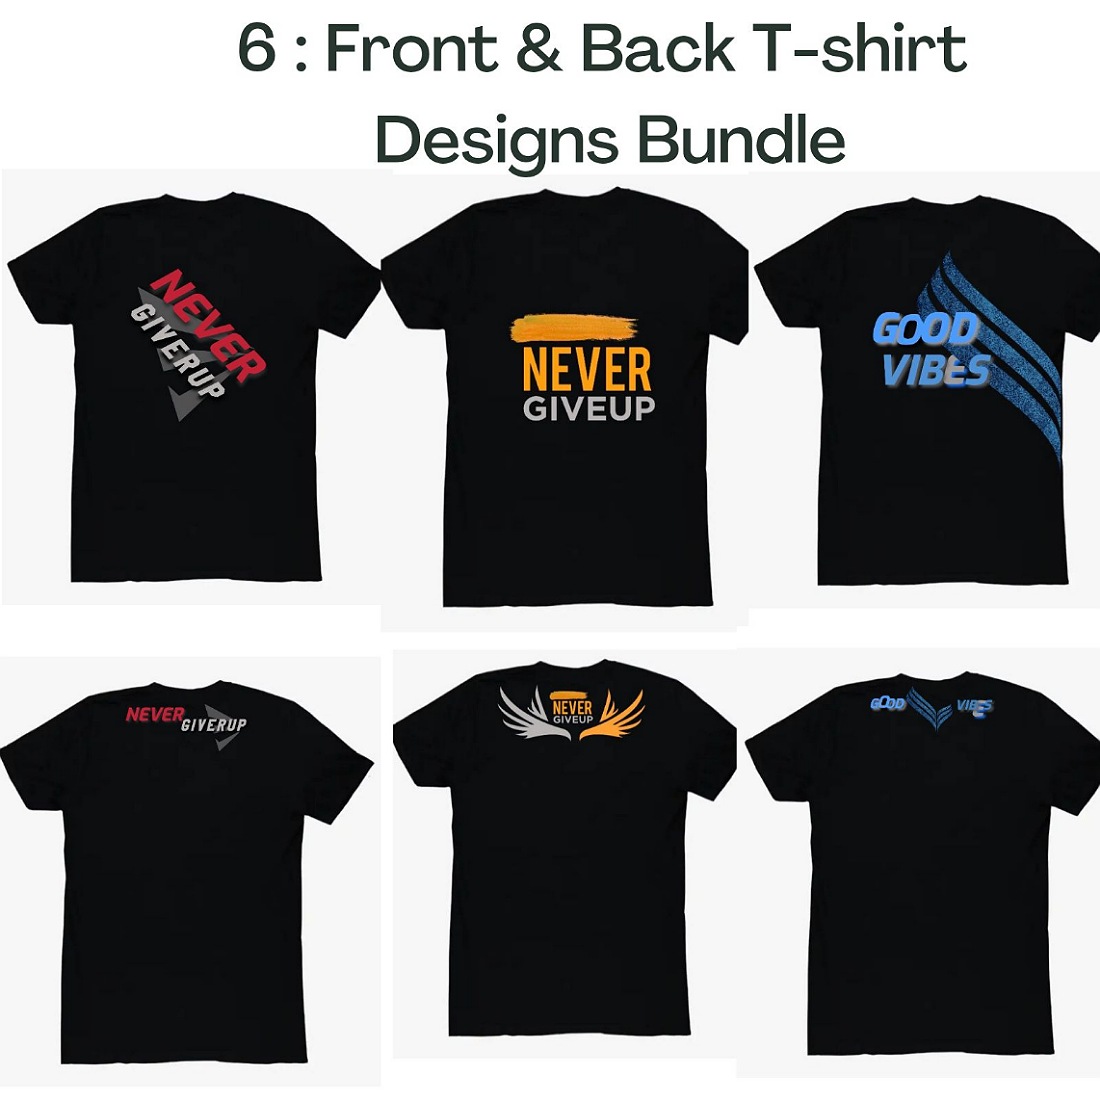 6 T Shirt Design Bundle Front And Back Cover Image.